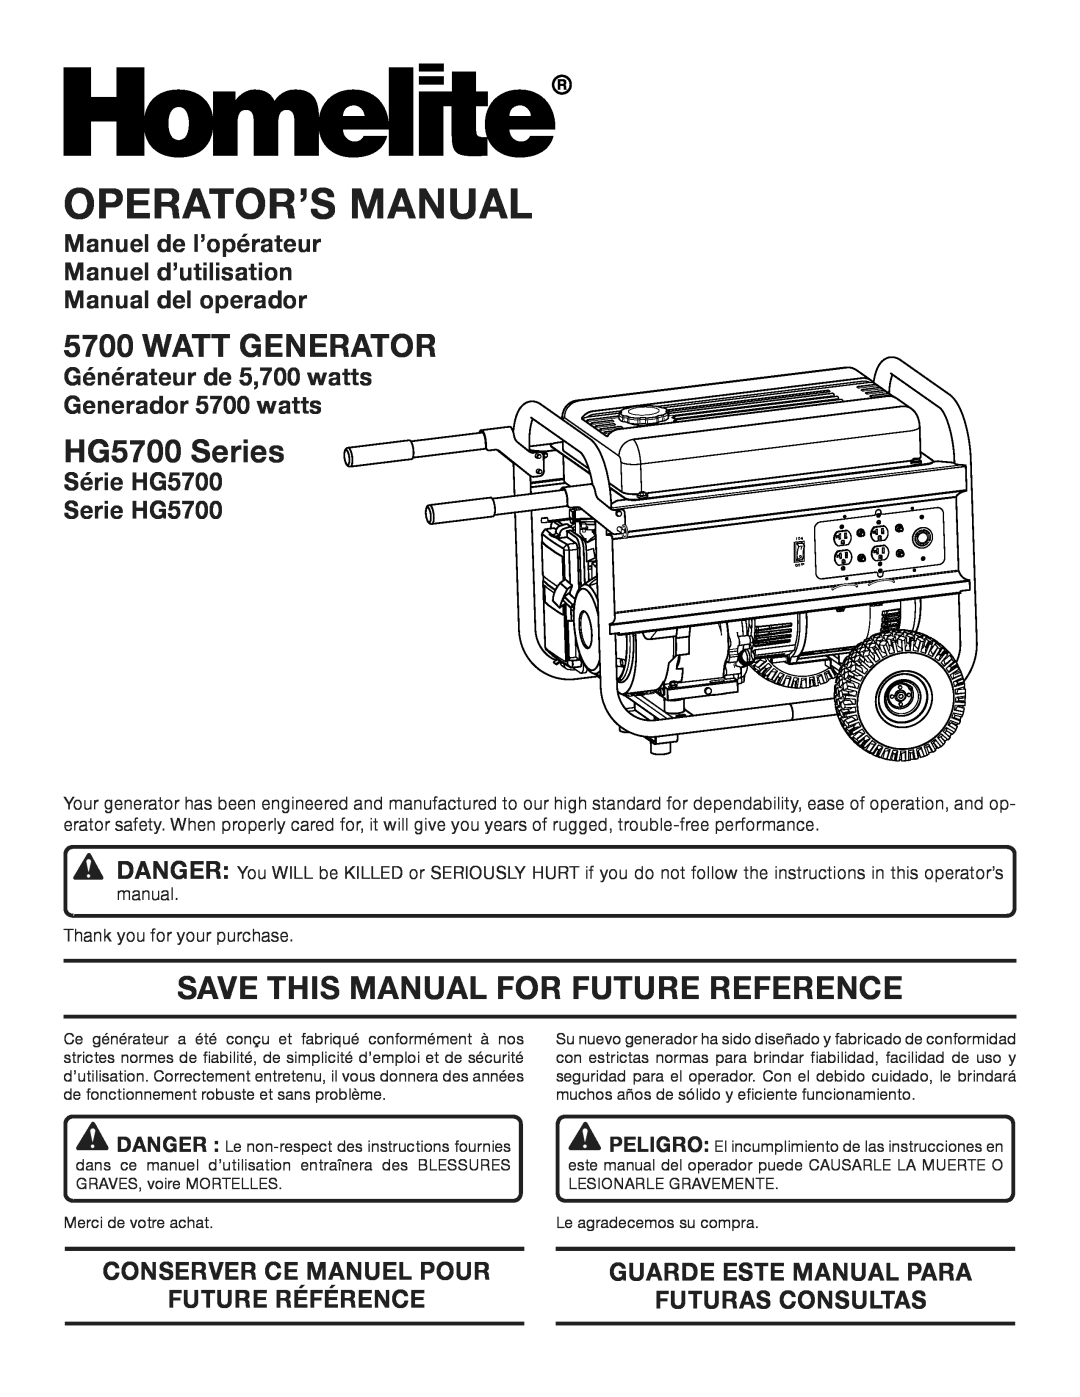 Homelite manuel dutilisation Watt Generator, HG5700 Series, Save This Manual For Future Reference, Operator’S Manual 